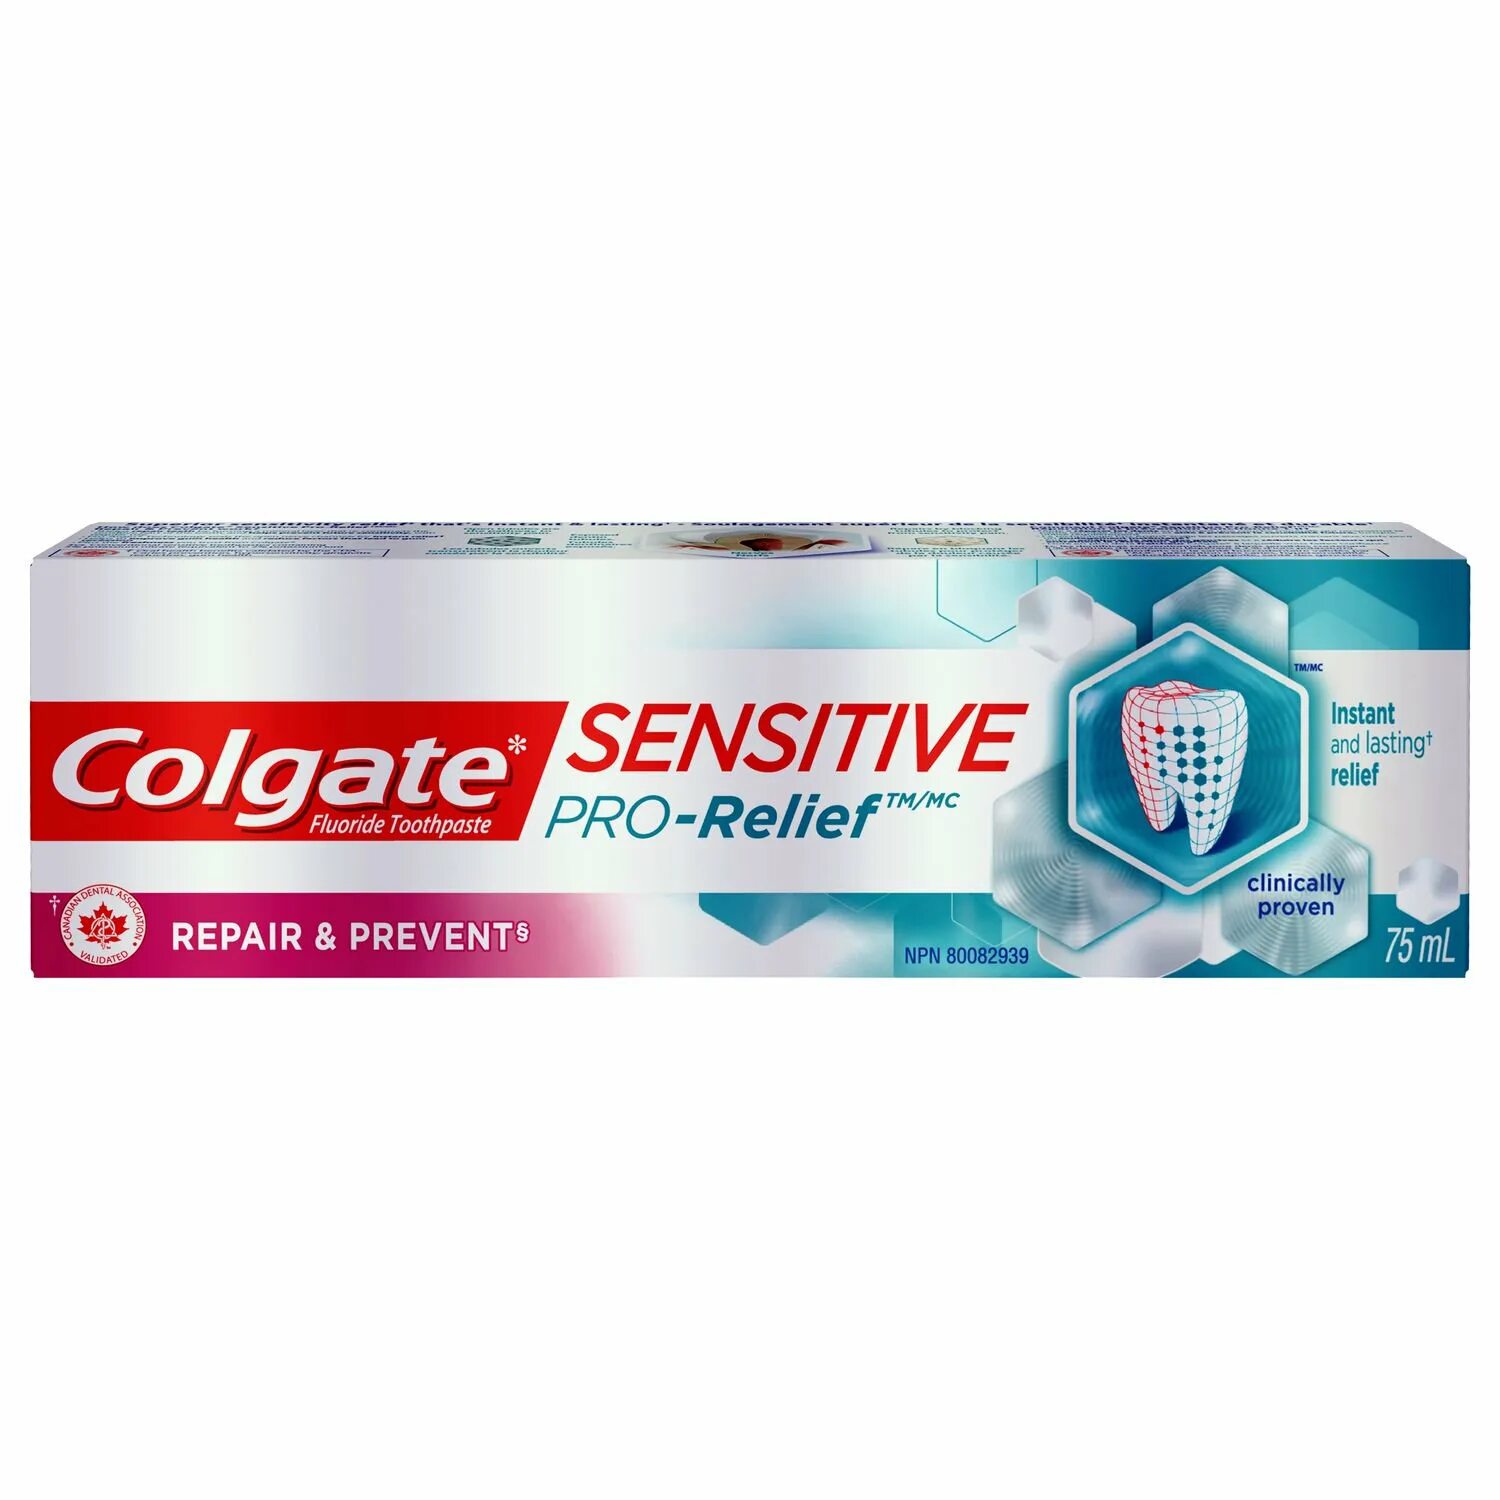 Зубная паста "Колгейт" sensitive Pro-Relief. Сенситив про релиф зубная паста. Паста Колгейт Сенситив про релиф. Колгейт сенситив про релиф